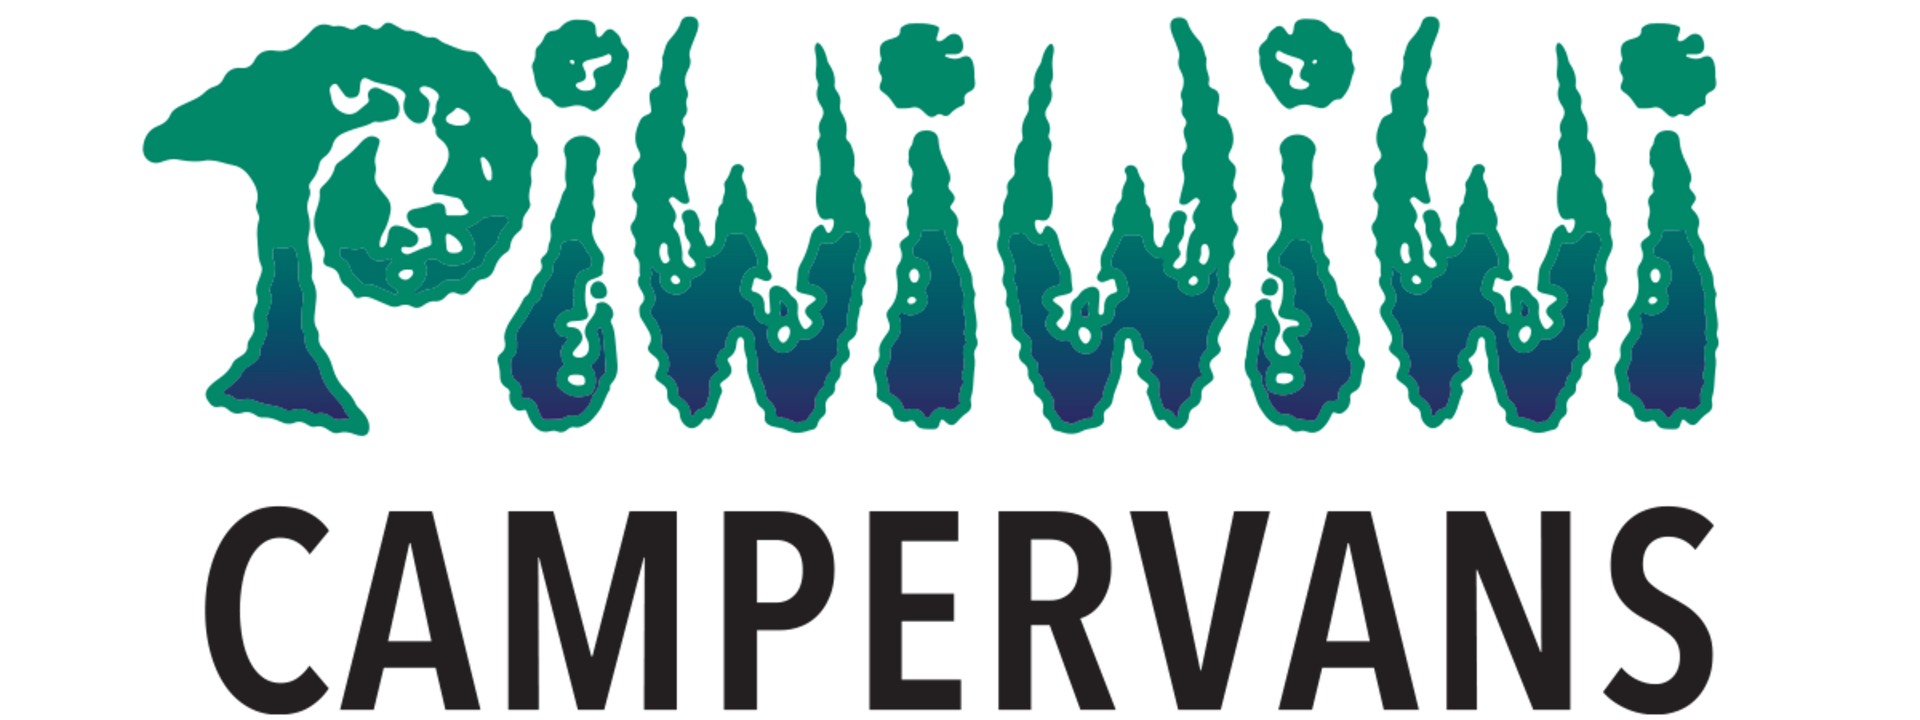 Piwiwiwi Logo_V03_RGB_1200px_72dpi.png